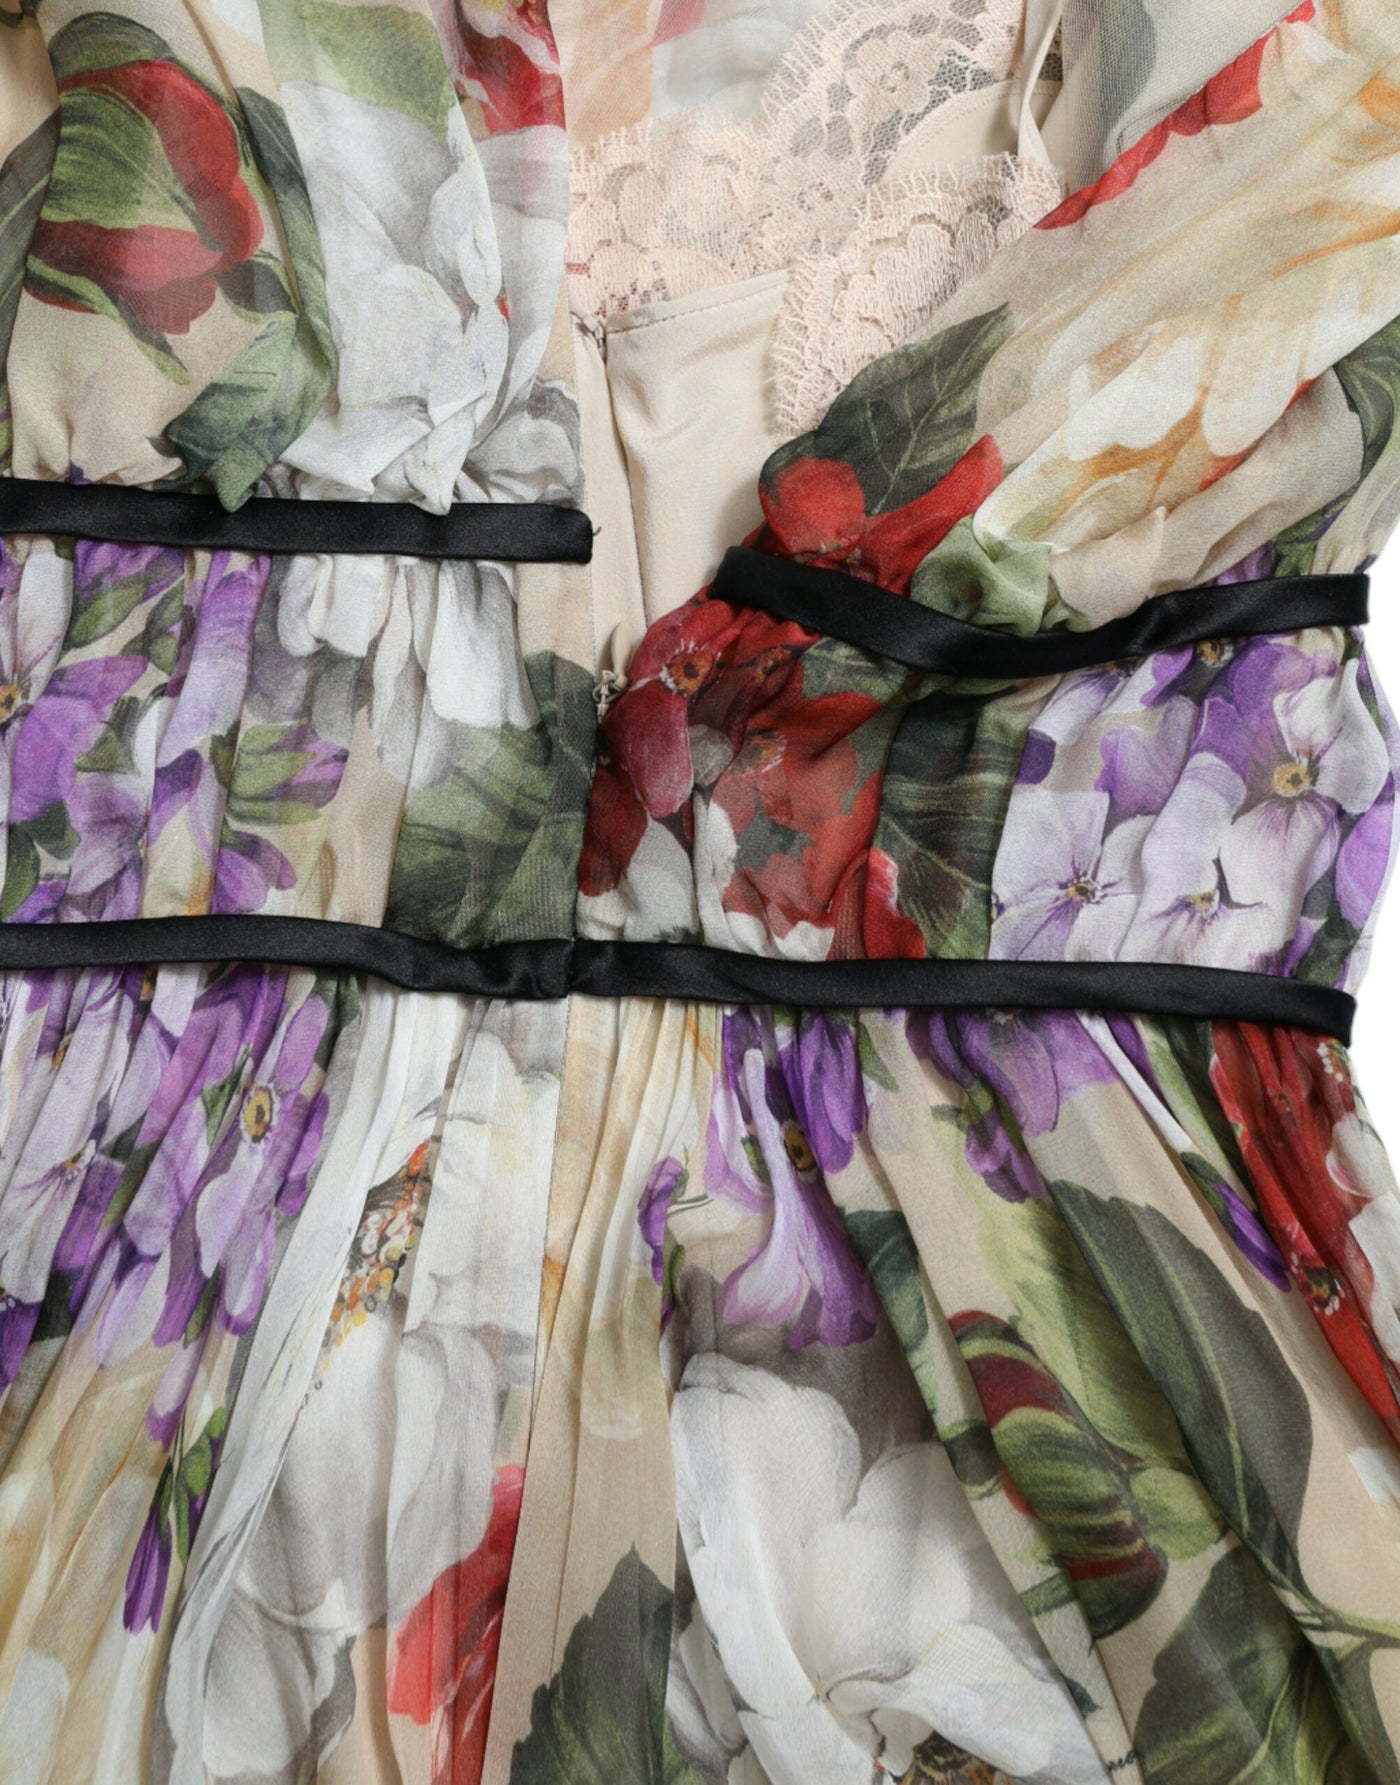 Dolce & Gabbana Beige Floral Sleeveless A-line Mini Dress